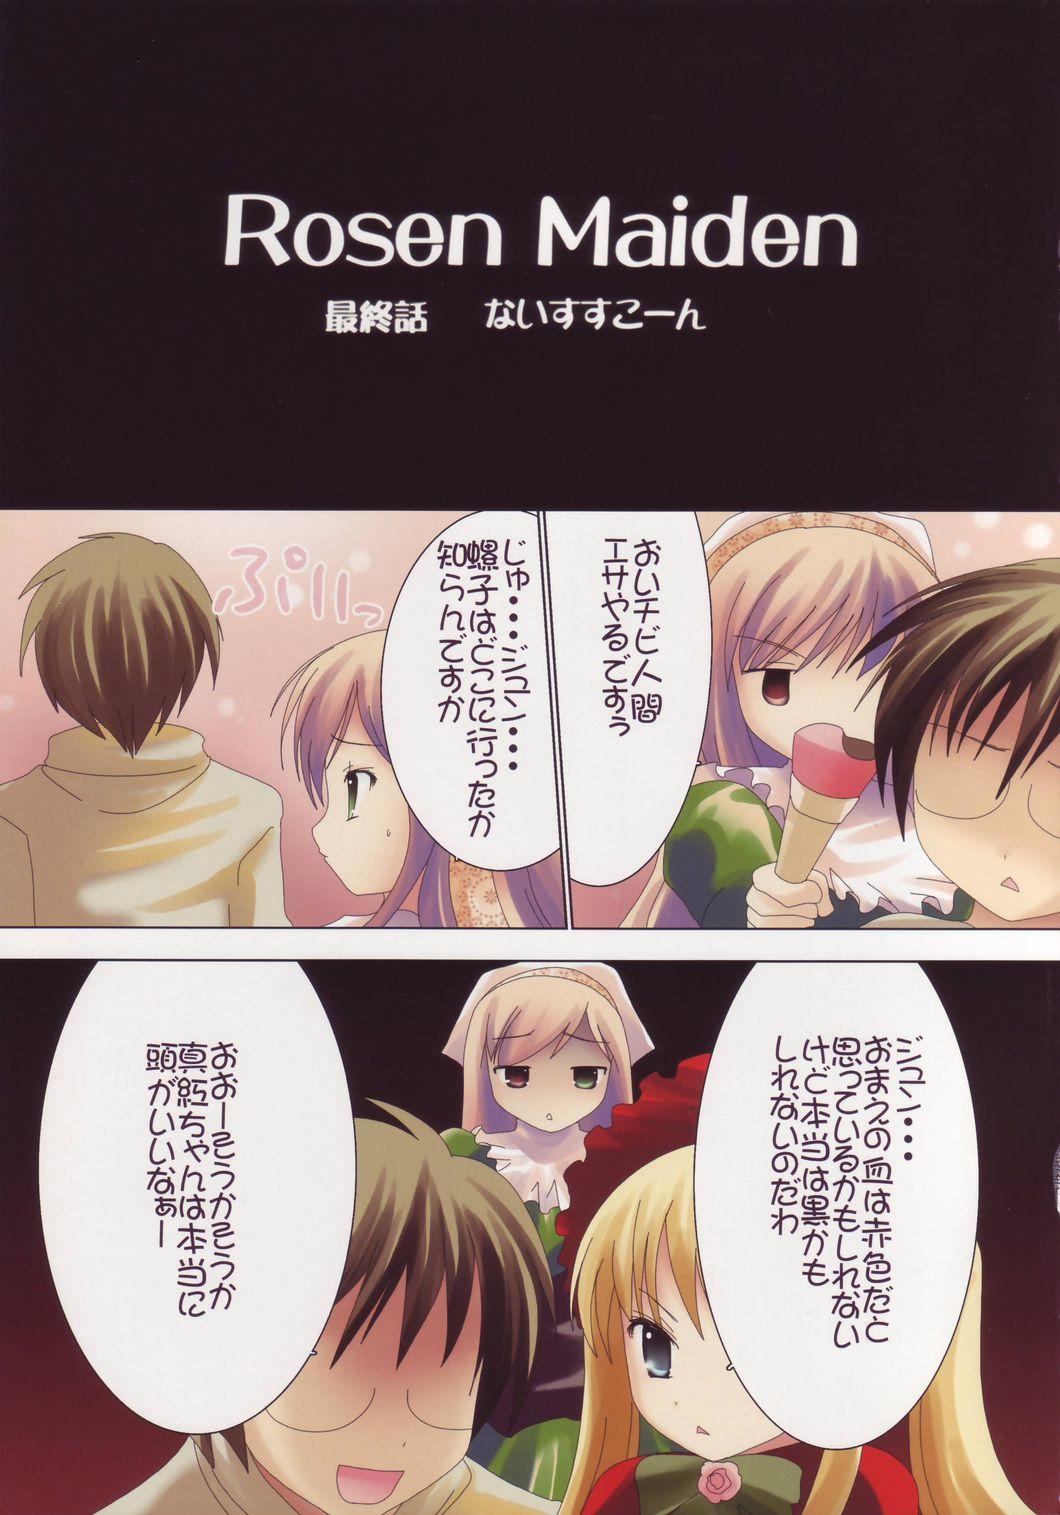 Chibola Suiseiseki wa, Koi no Byou ni Nayamasete - Rozen maiden Motel - Page 4